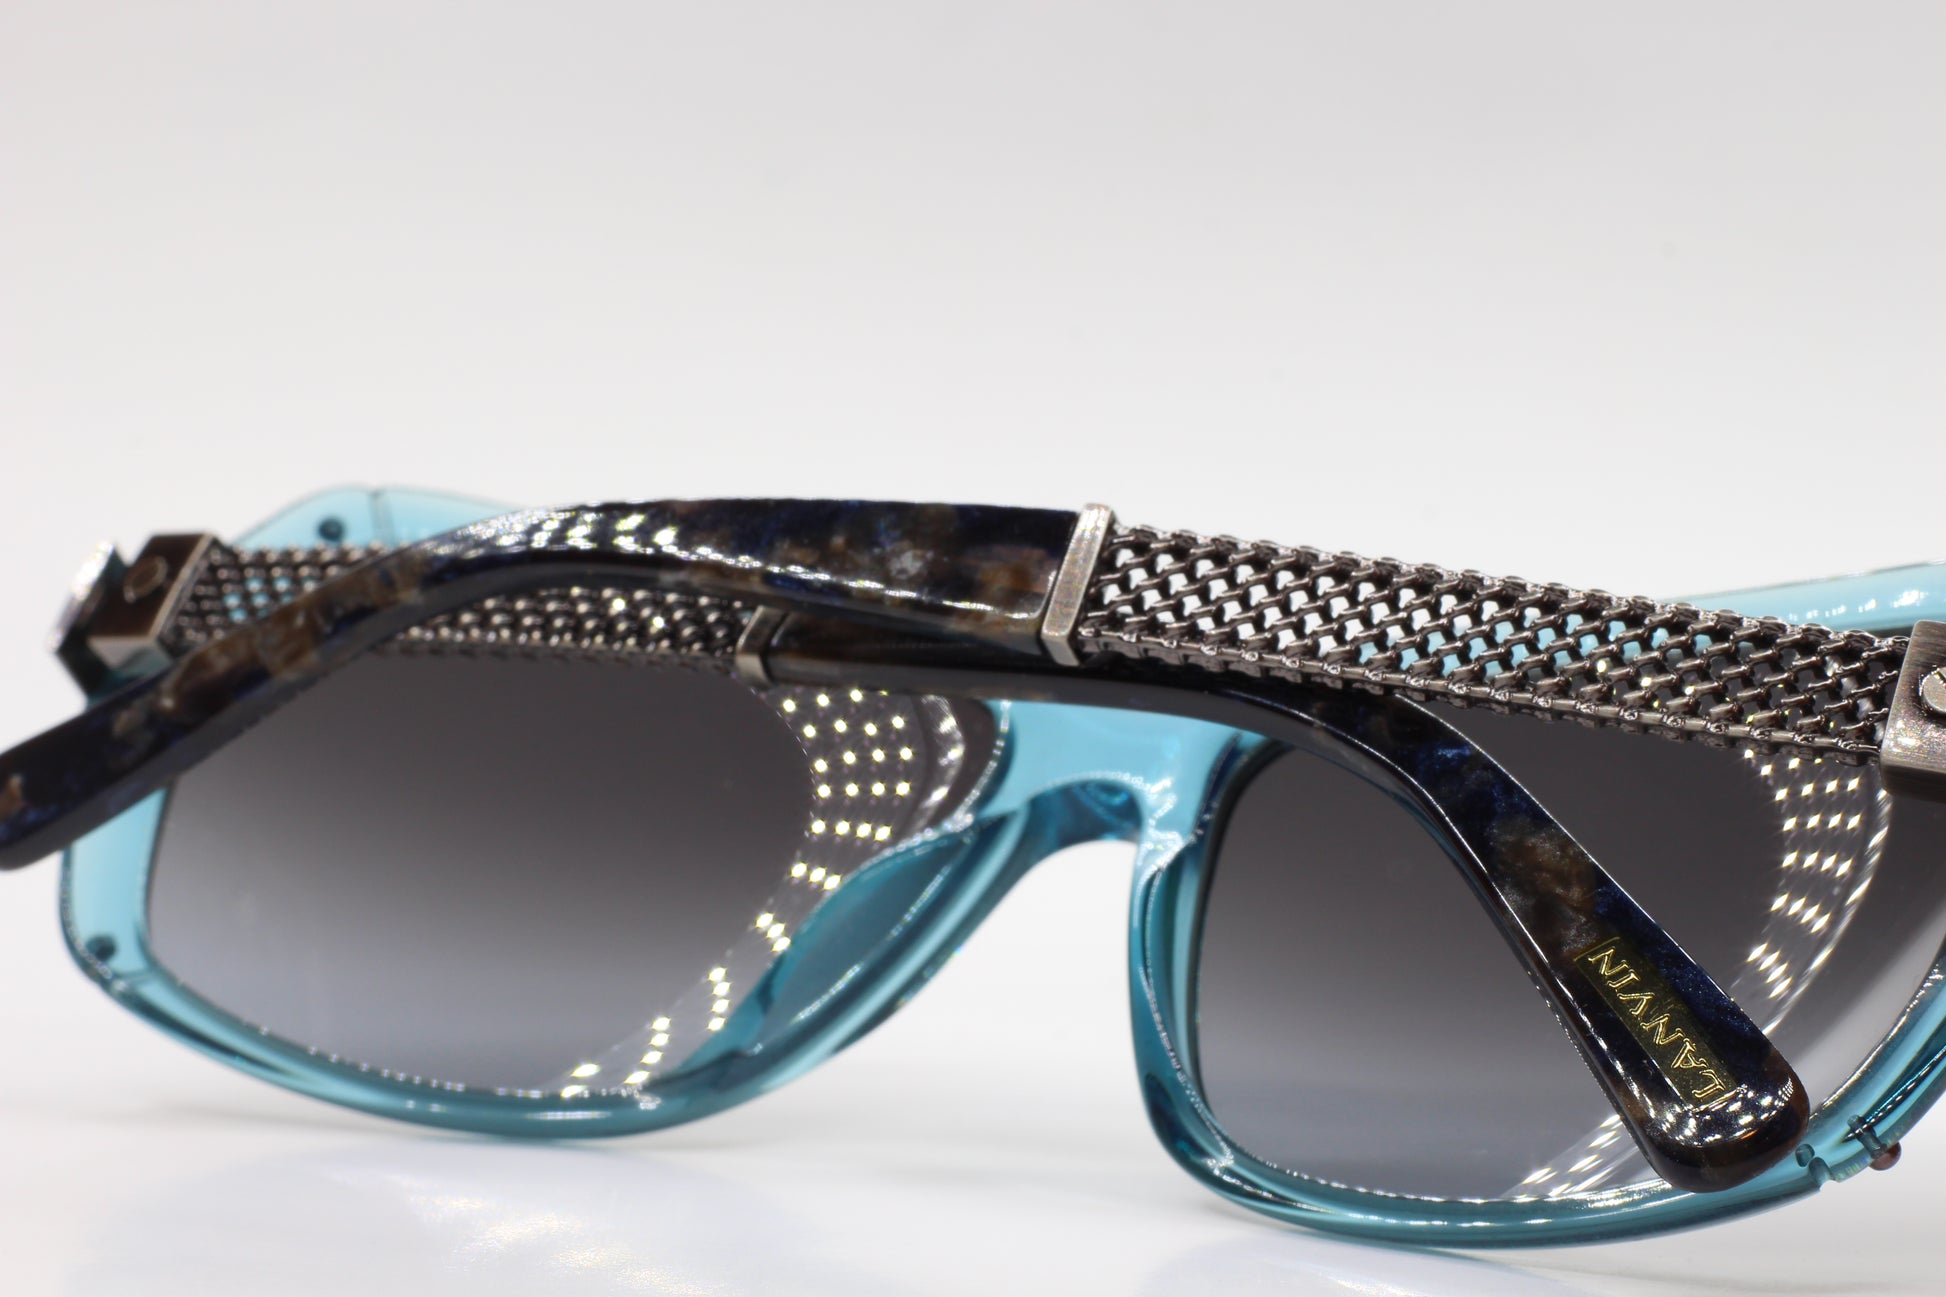 Lanvin SLN550 0V93 Transparent Light Blue Luxury Sunglasses - ABC Optical